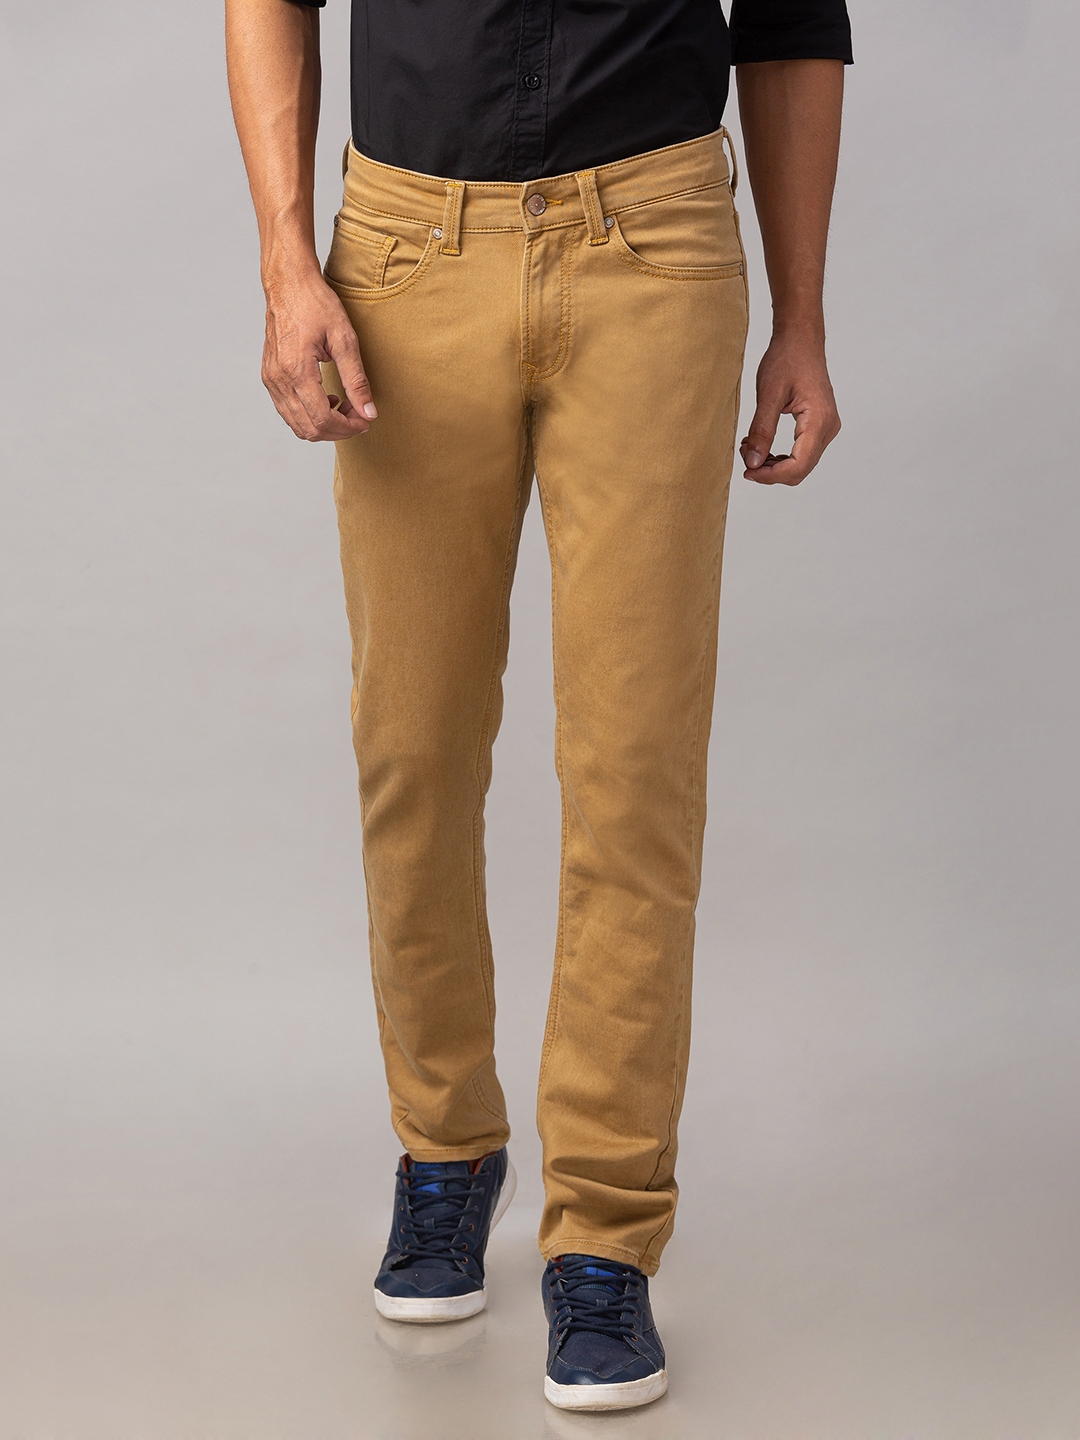 Spykar | Spykar Khaki Cotton Low Rise Slim Fit Narrow Leg Regular Length Jeans (Skinny)